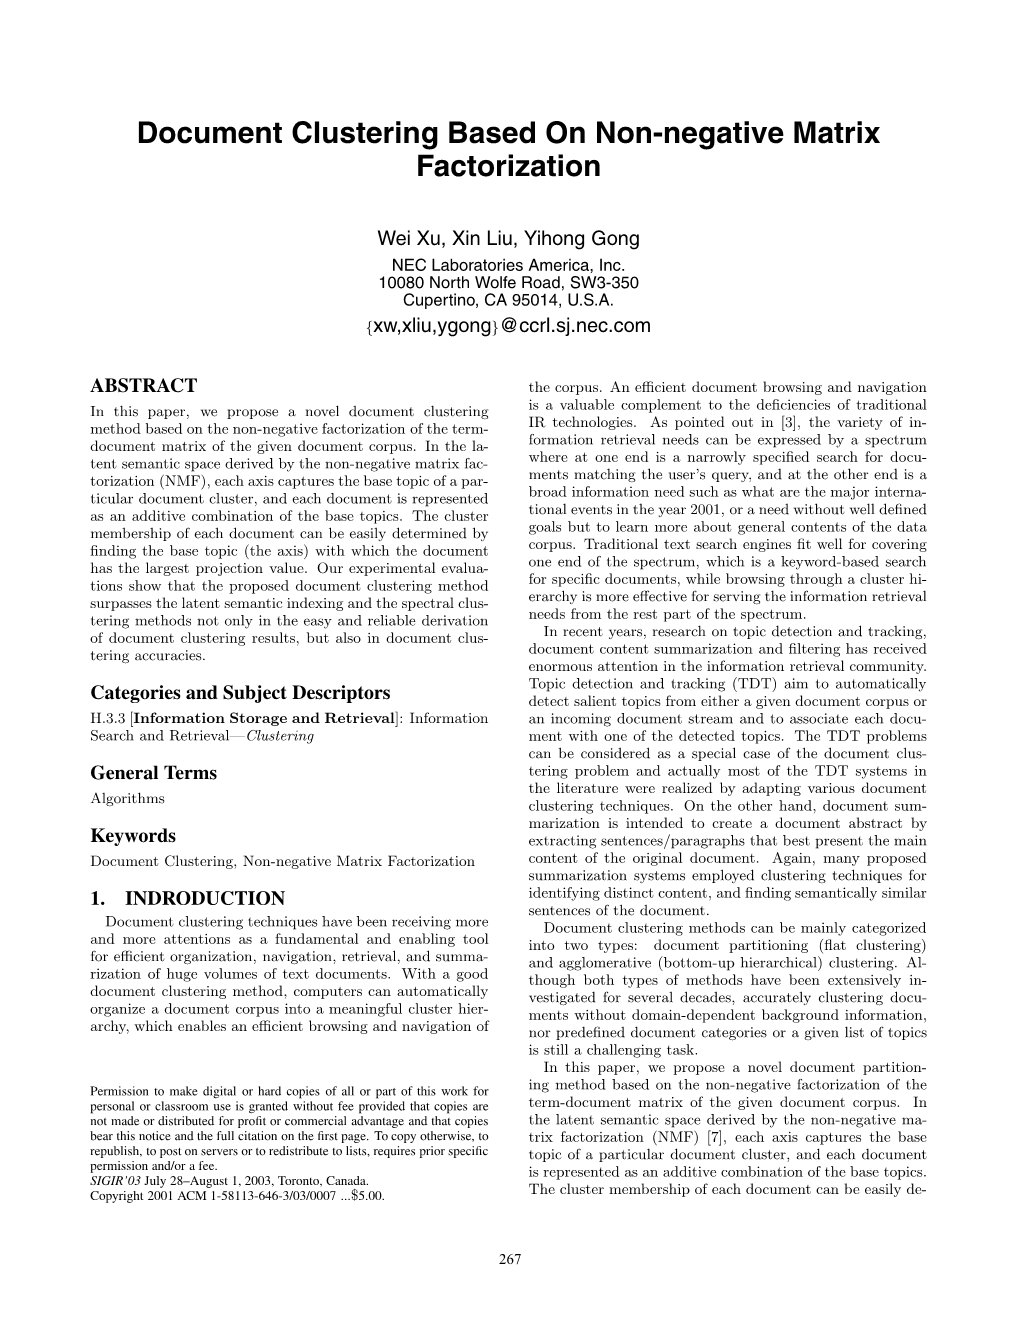 Document Clustering Based on Non-Negative Matrix Factorization